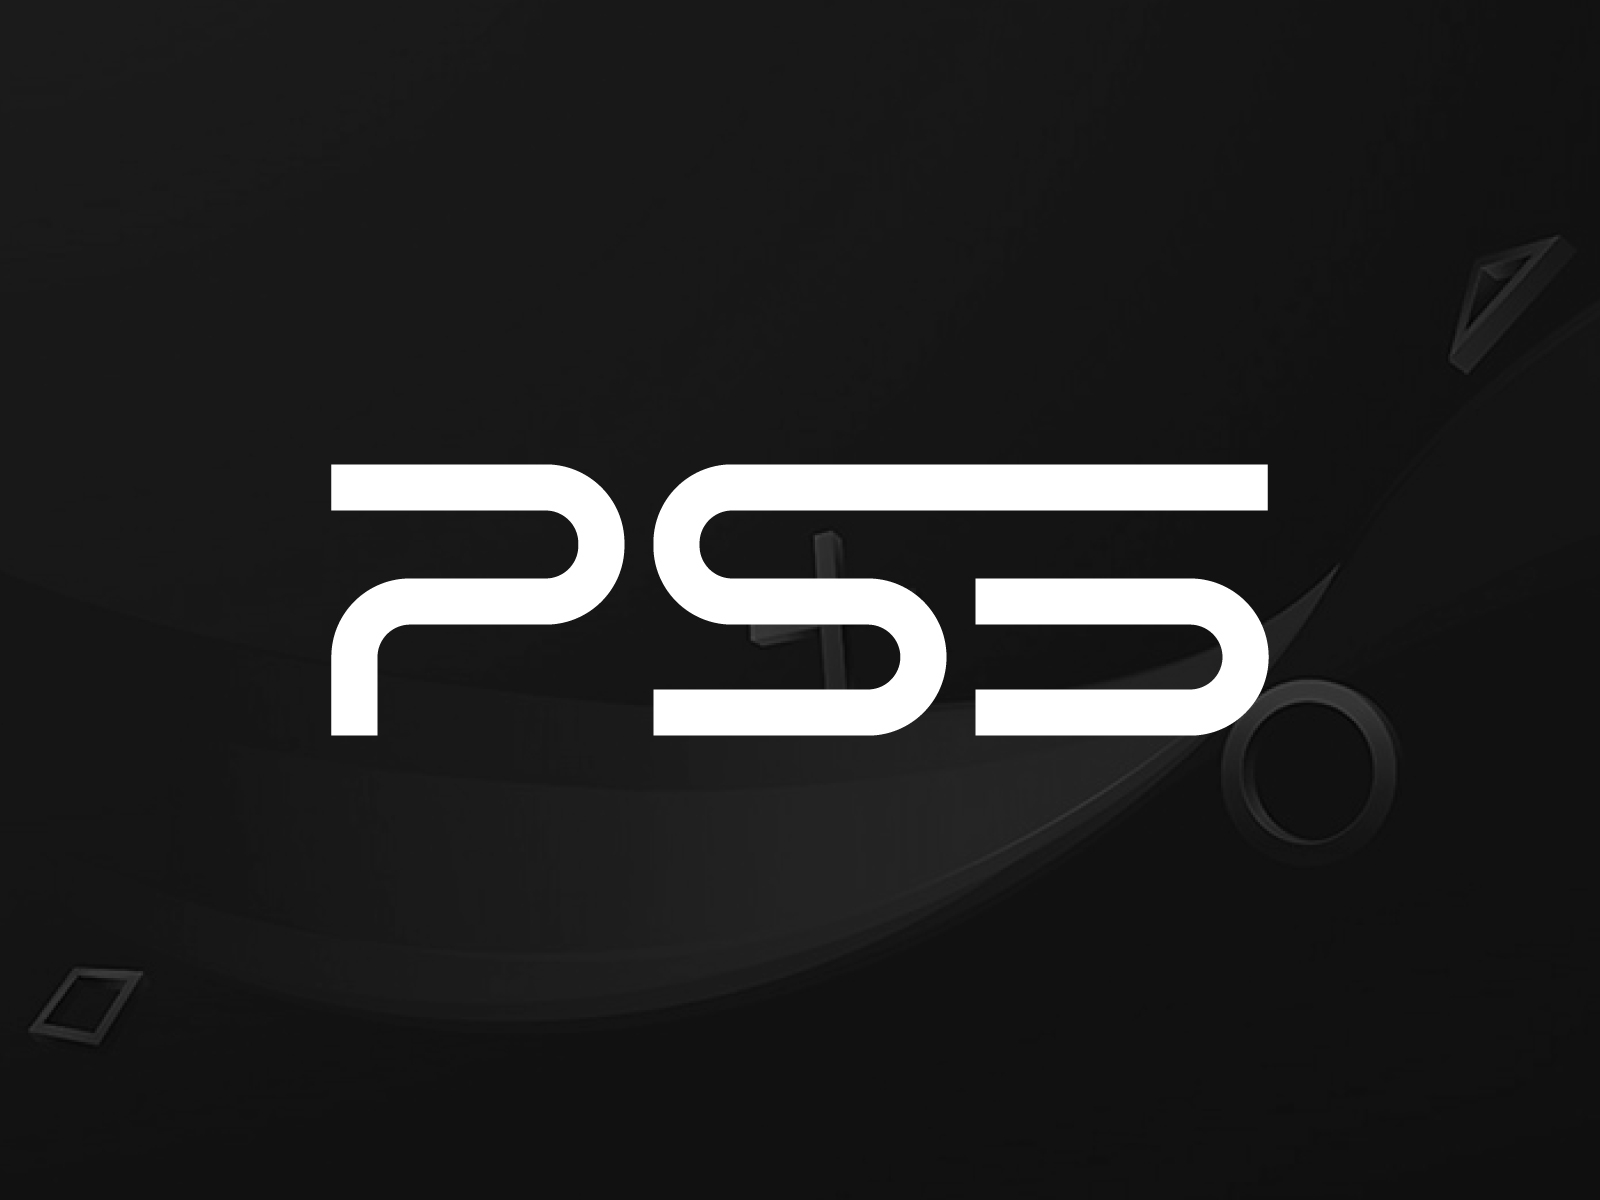 Ps5 какой регион. Sony ps5 logo. PLAYSTATION 5. Sony PLAYSTATION 5 logo. Ps5 logo vector.